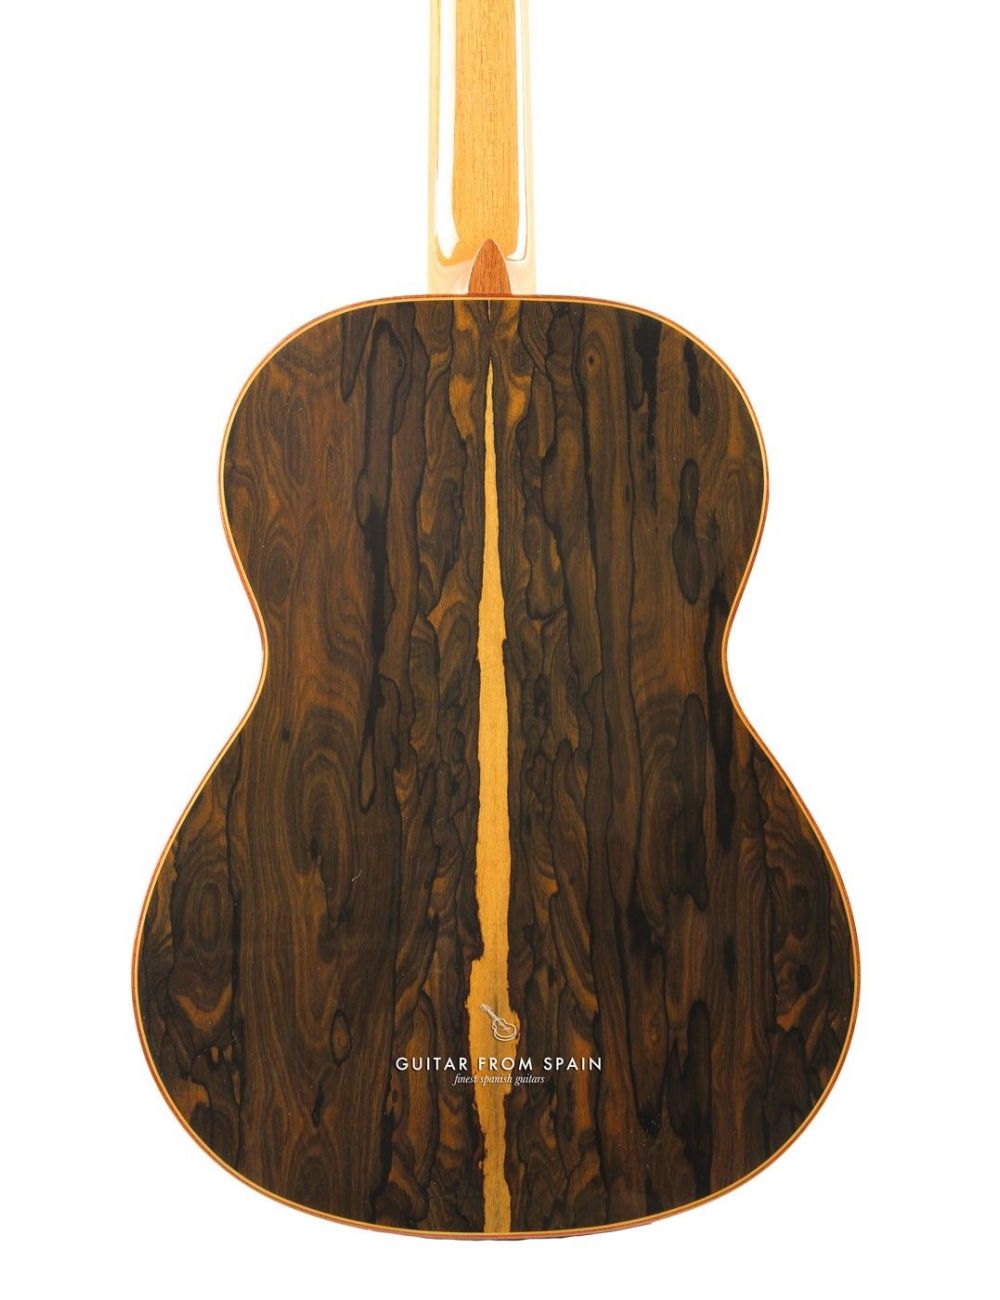 Alhambra Luthier Aniversario Classical Guitar Luthier Aniversario Premium Classical